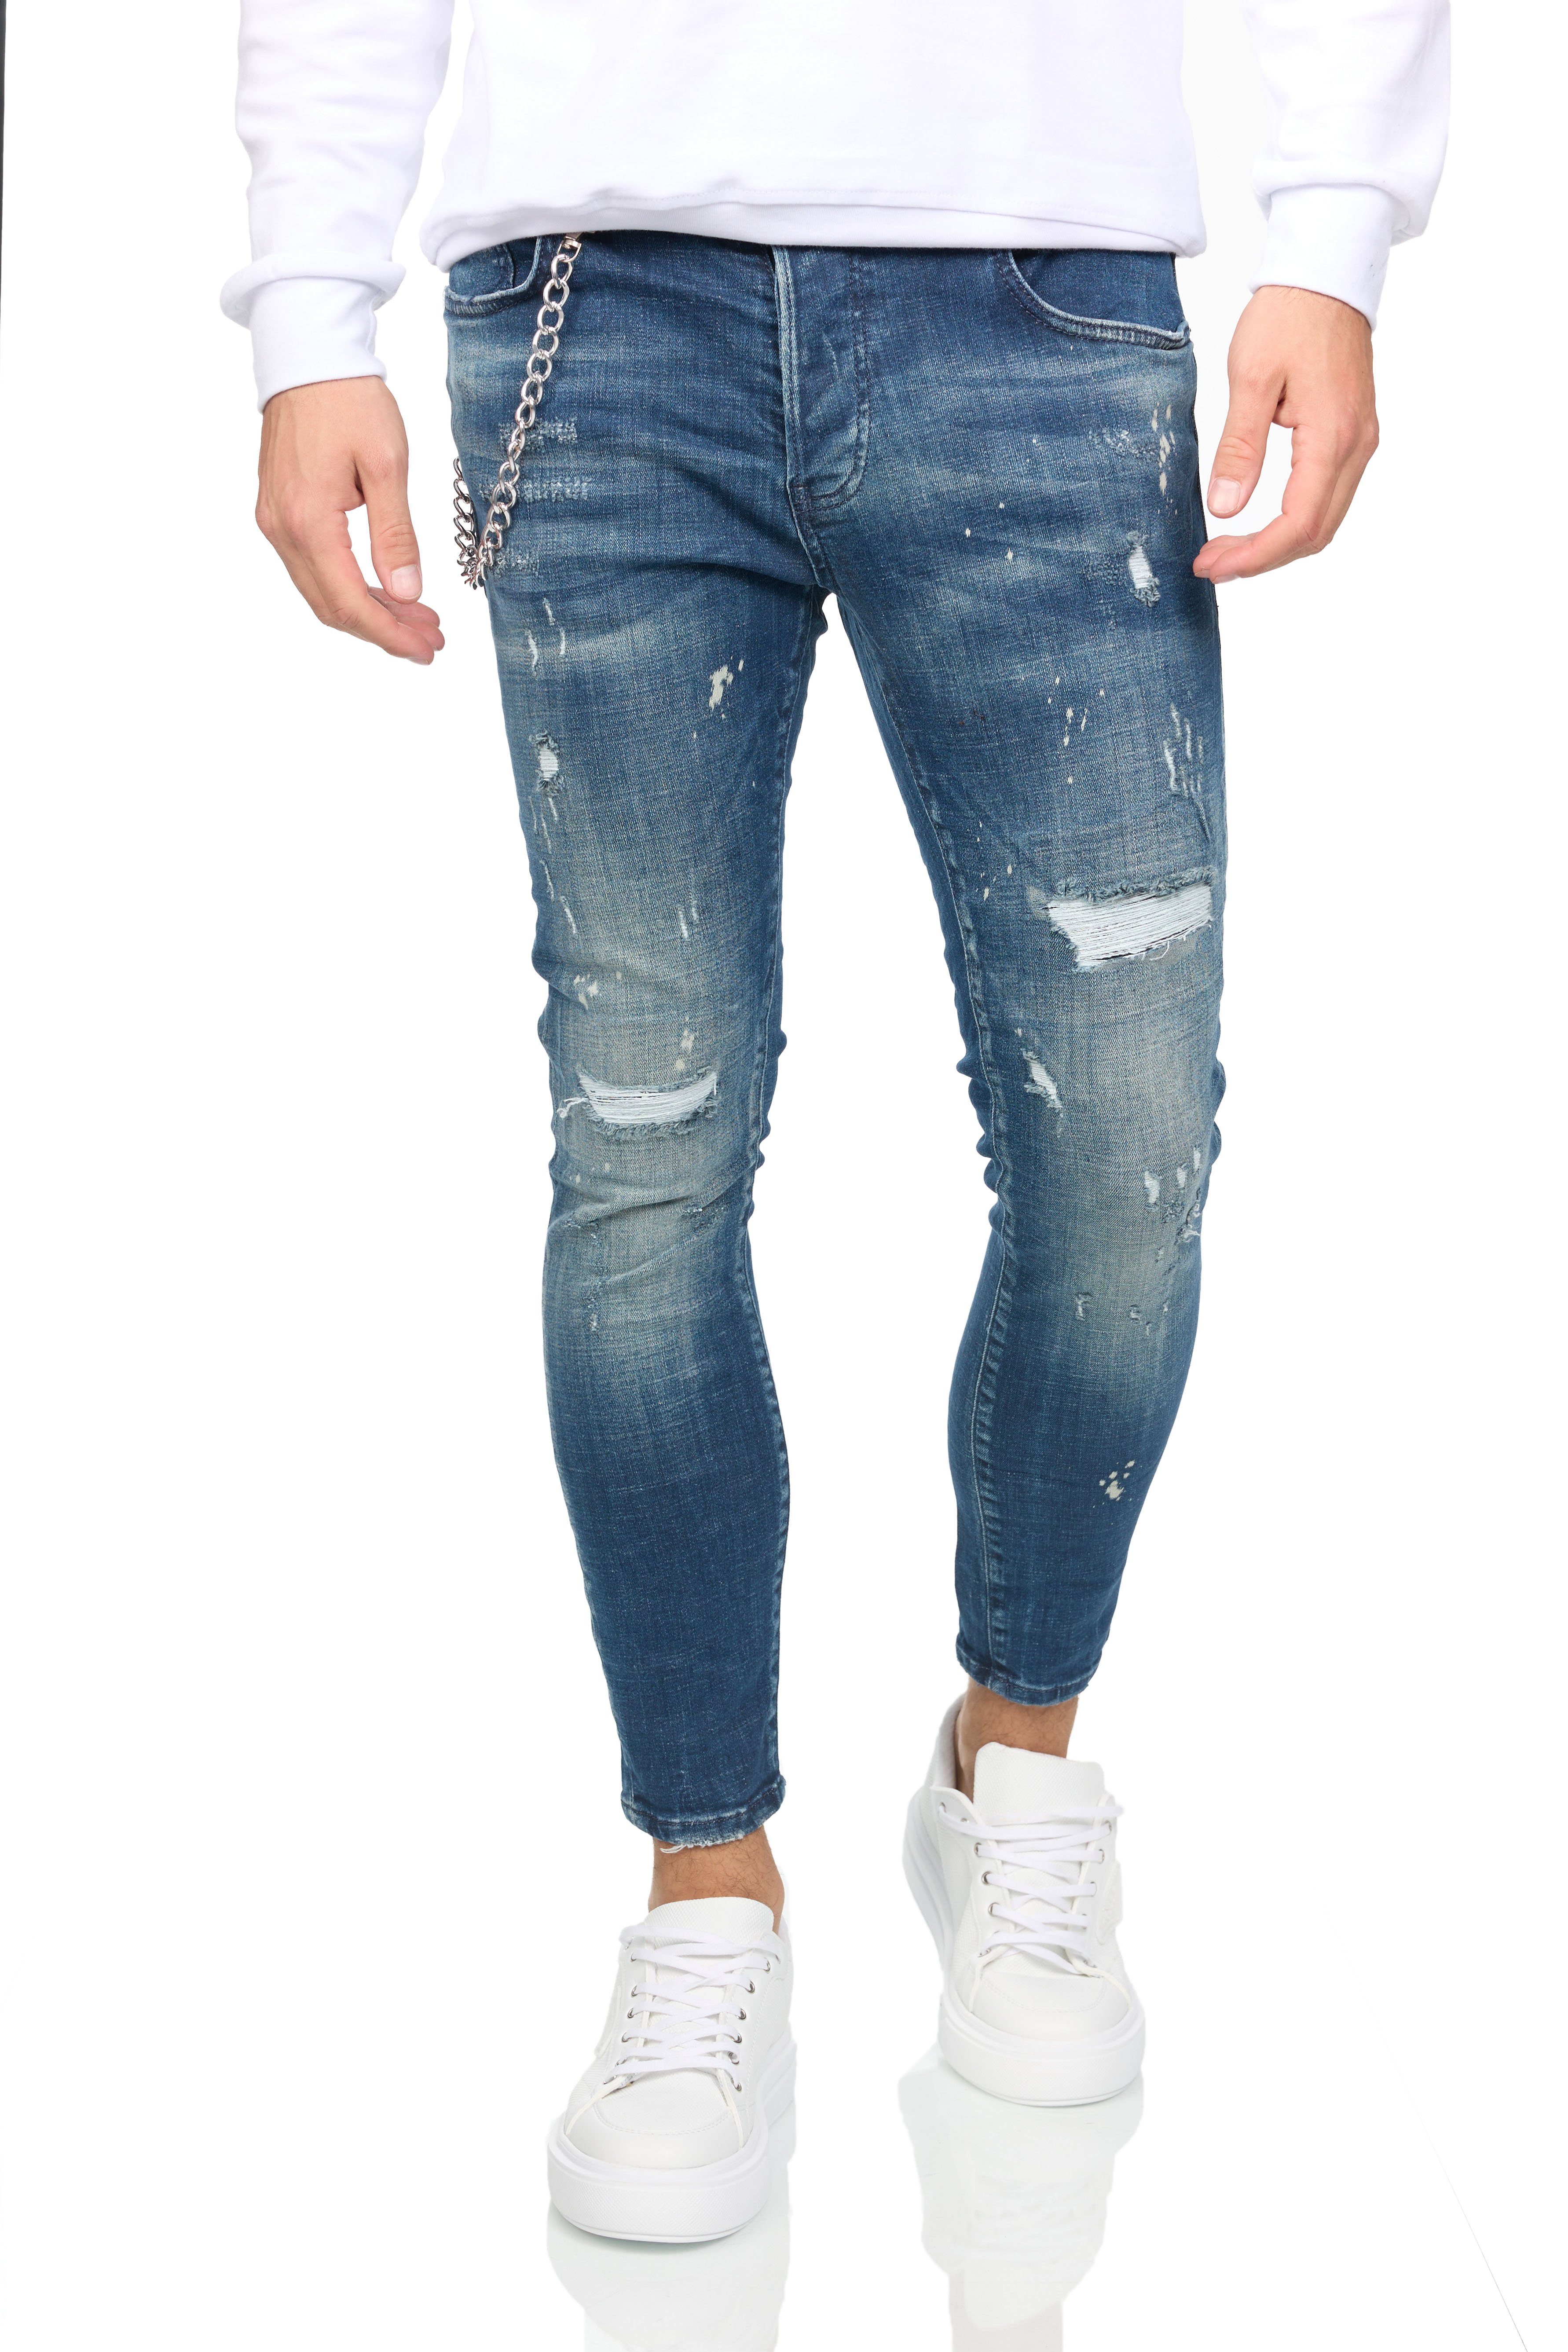 DH-BI Destroyed Super Denim Skinny stretchige Distriqt Skinny-fit-Jeans 15710 Look im Jeans